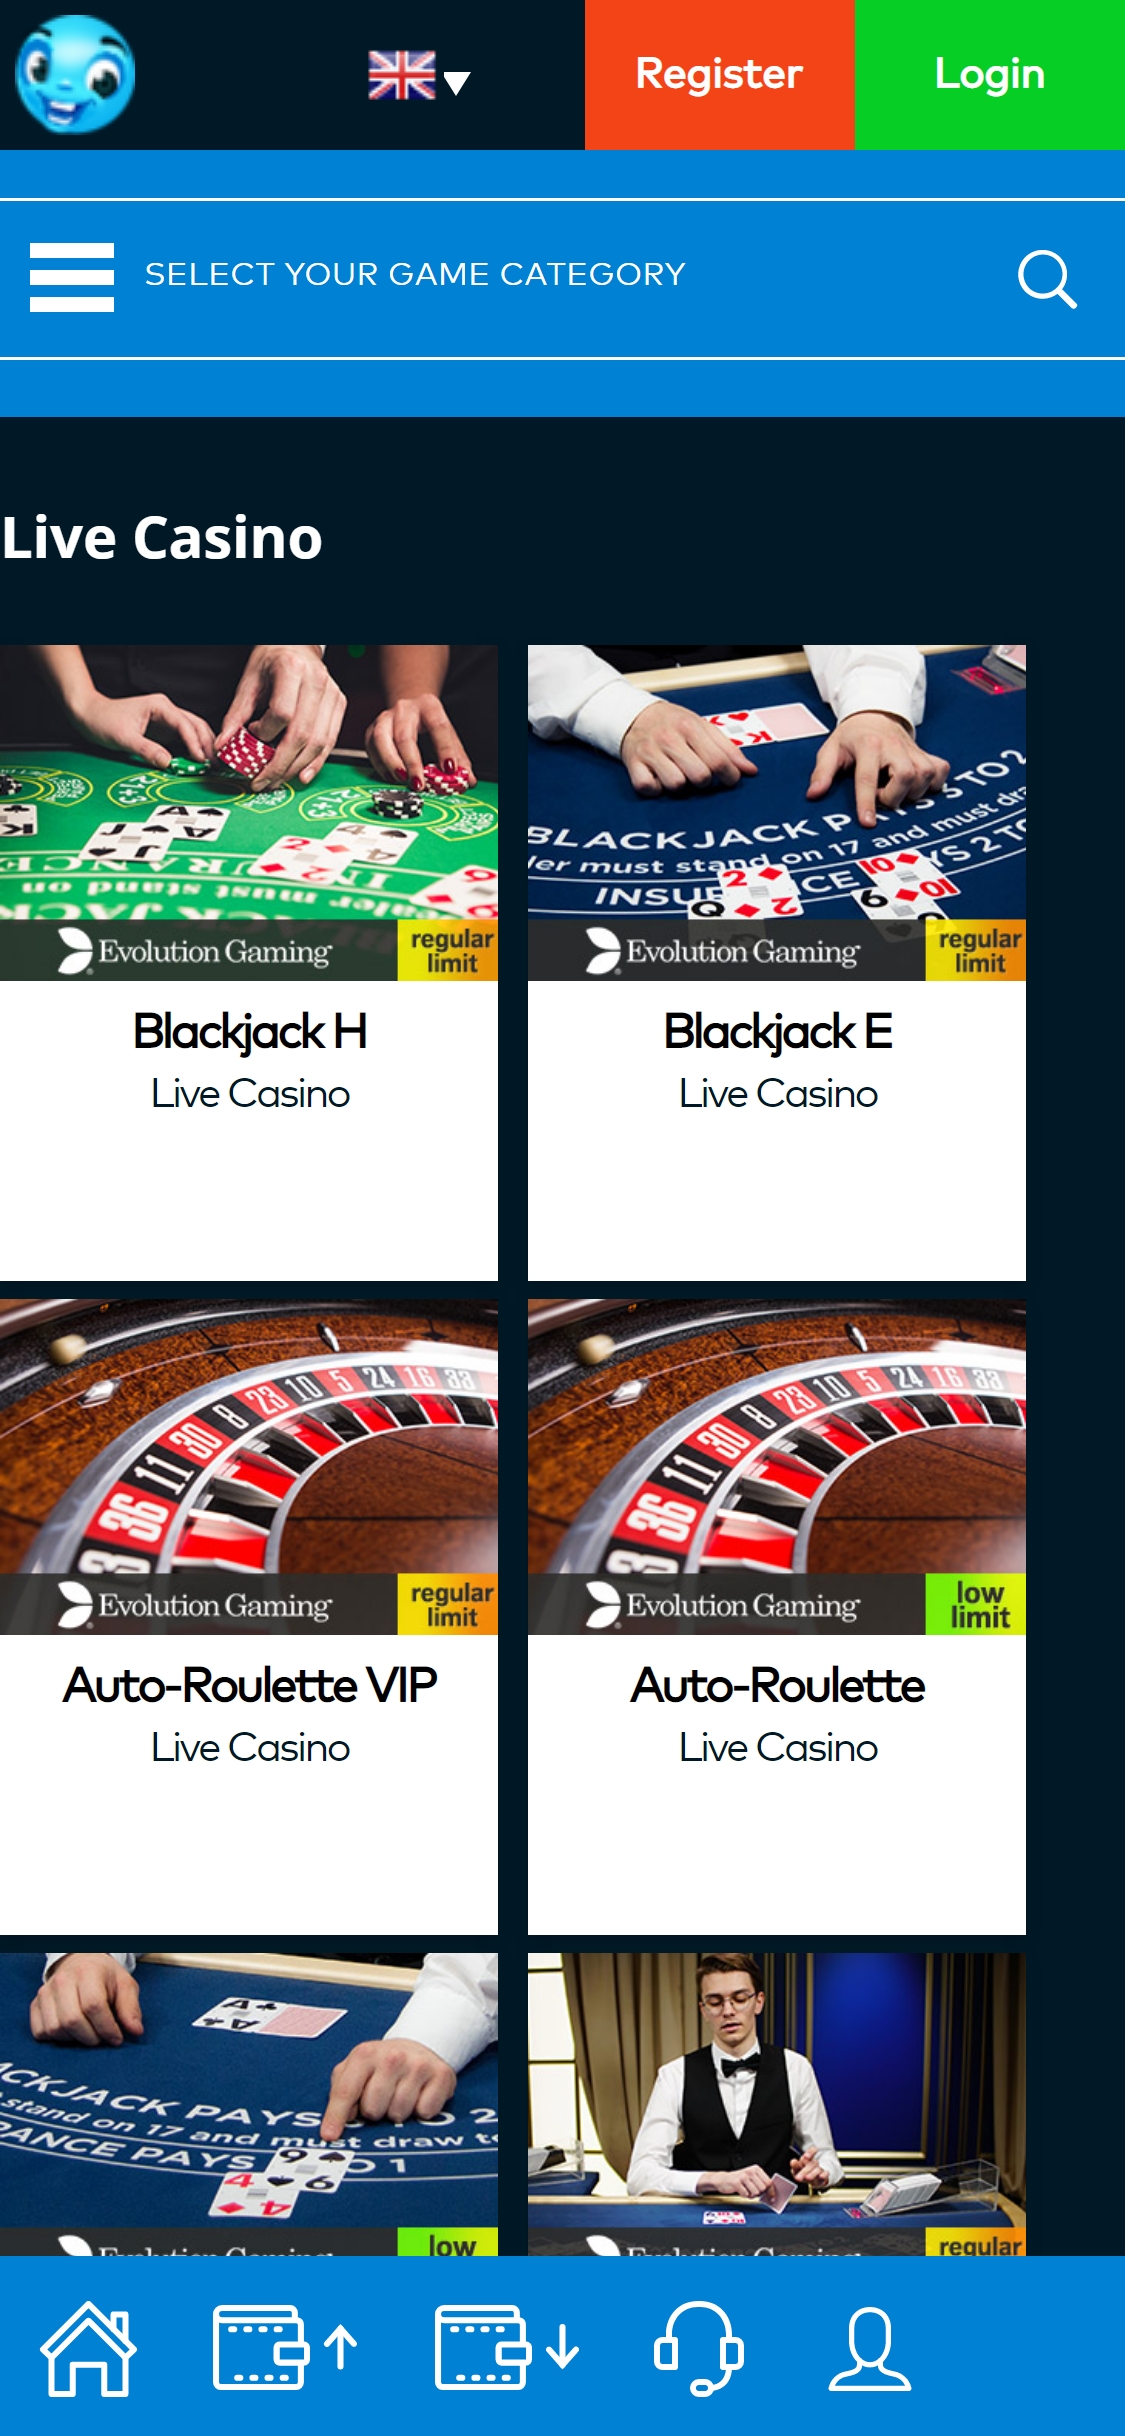 Fun Casino Mobile Live Dealer Games Review